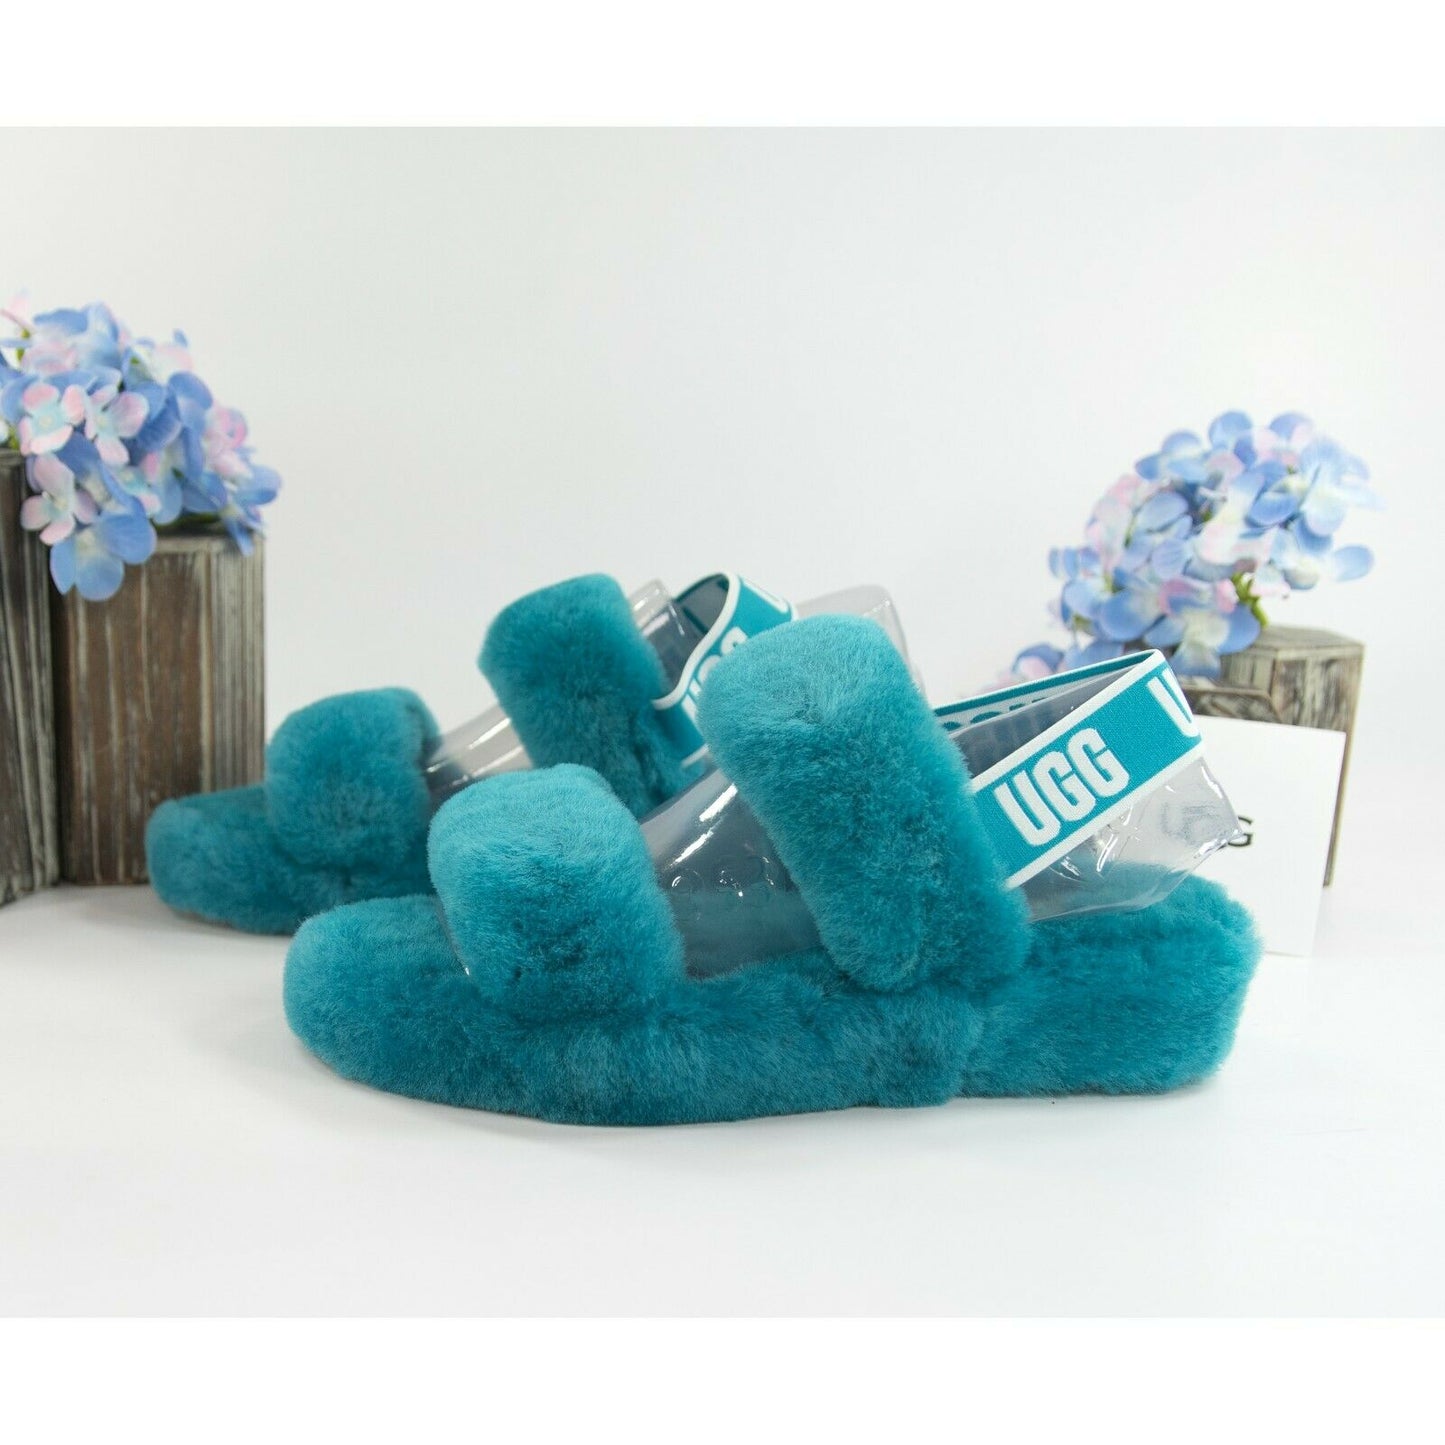 UGG Fluff Oh Yea Aqua Blue Sheepskin Fur Slippers Slides Sandals Sz 9 NIB